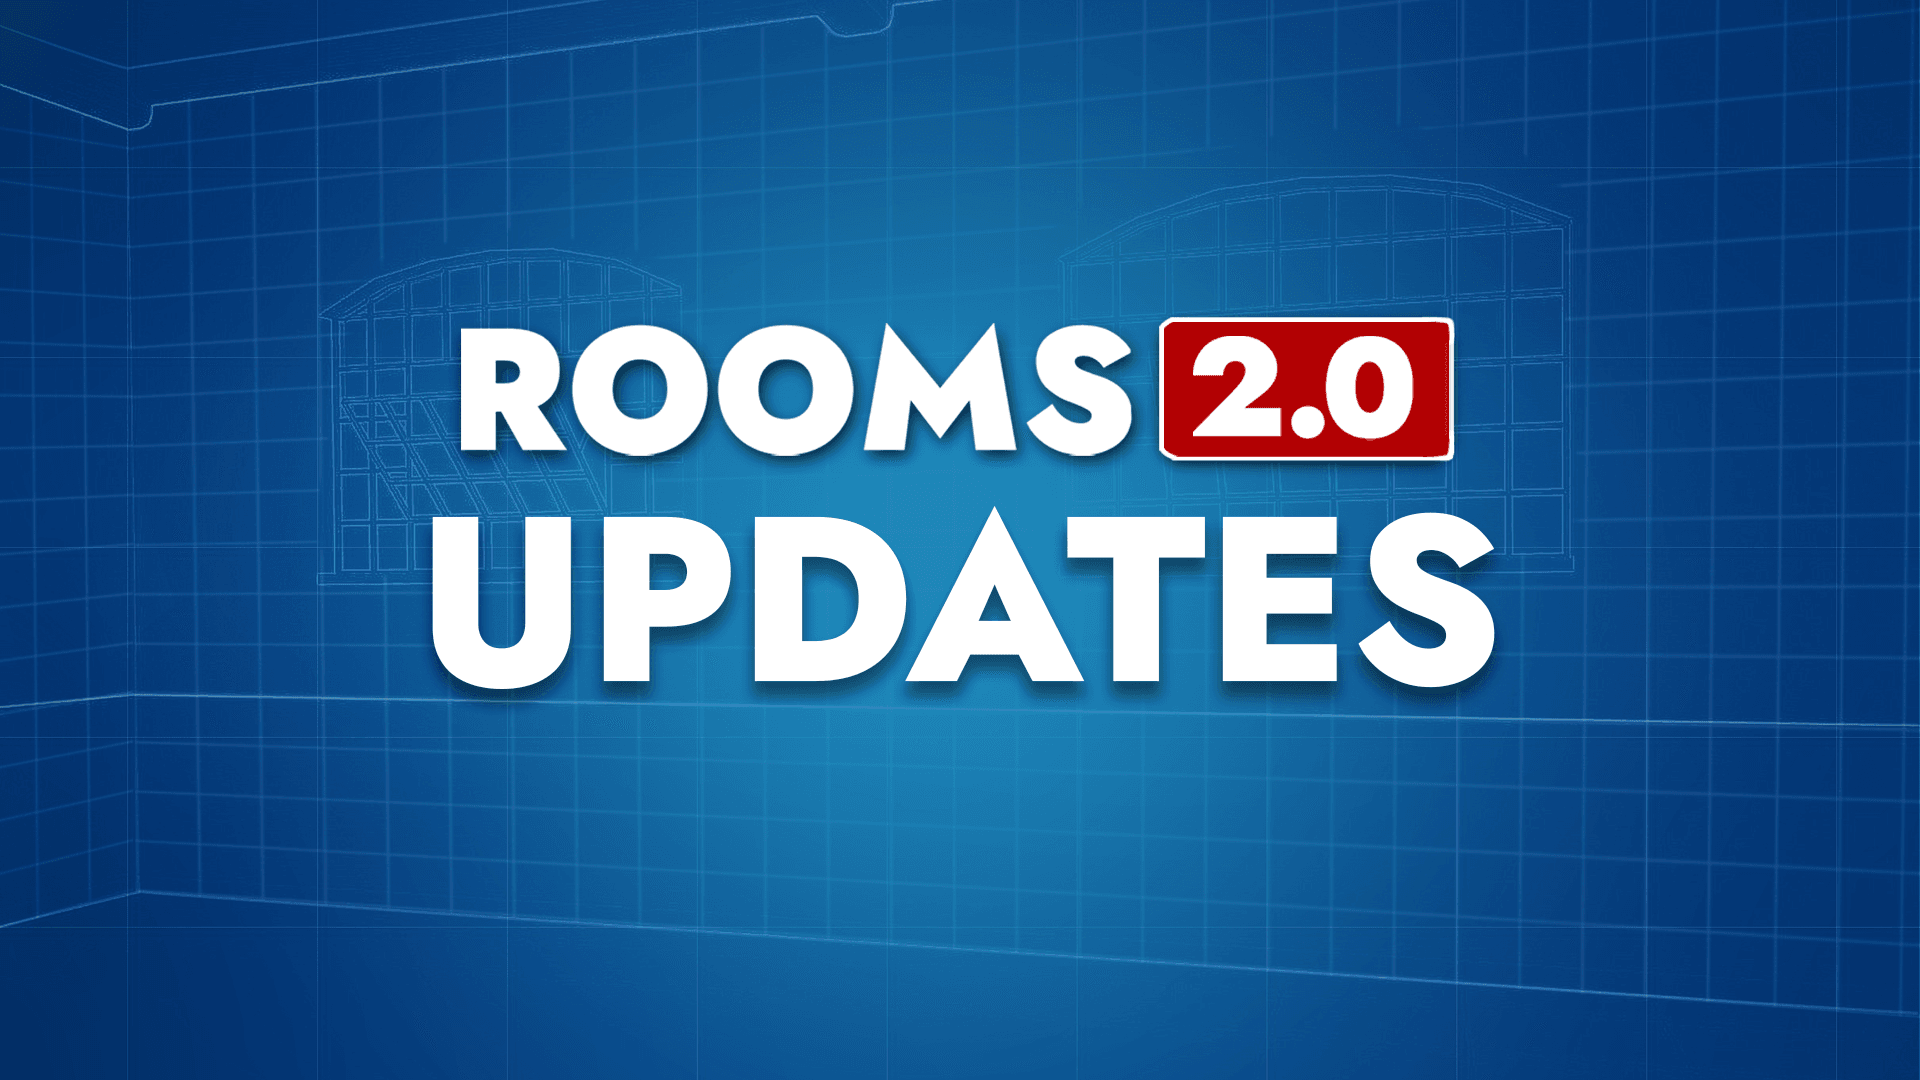 Rooms 2.0 Updates